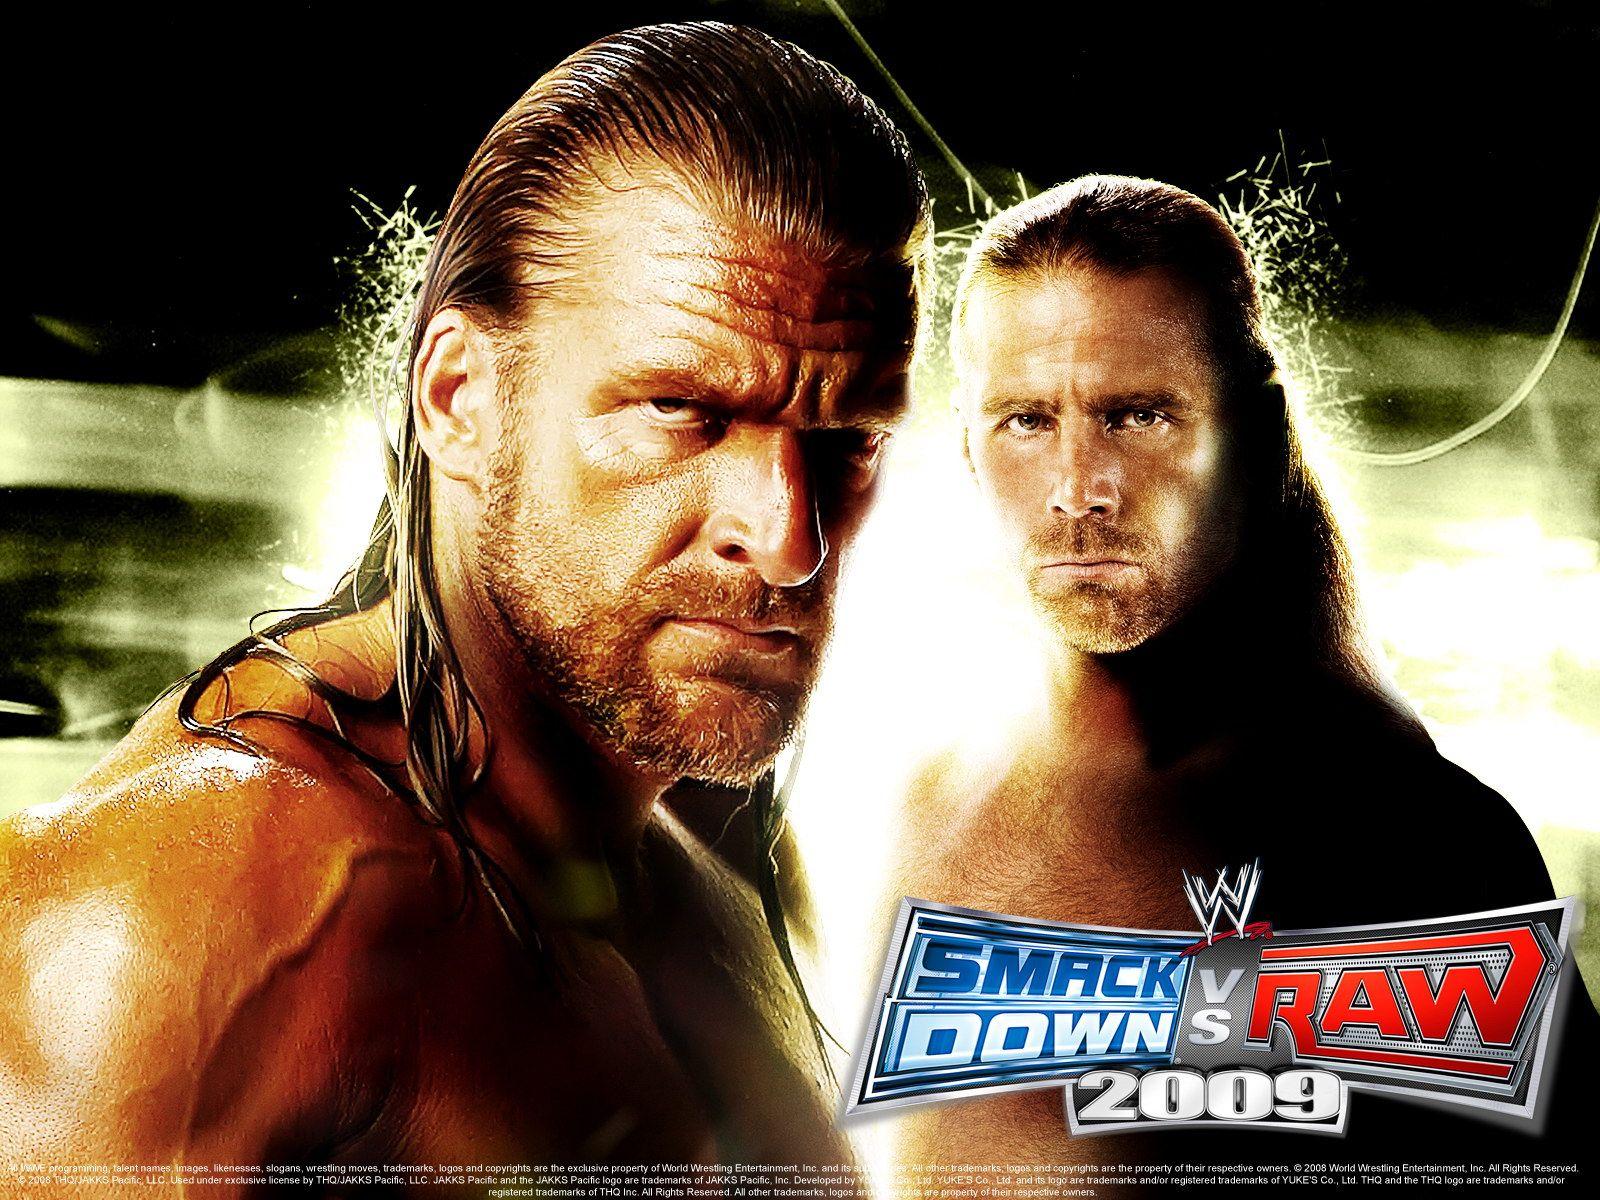 D Generation X Free WWE SmackDown Vs. Raw 2009 Wallpaper Gallery